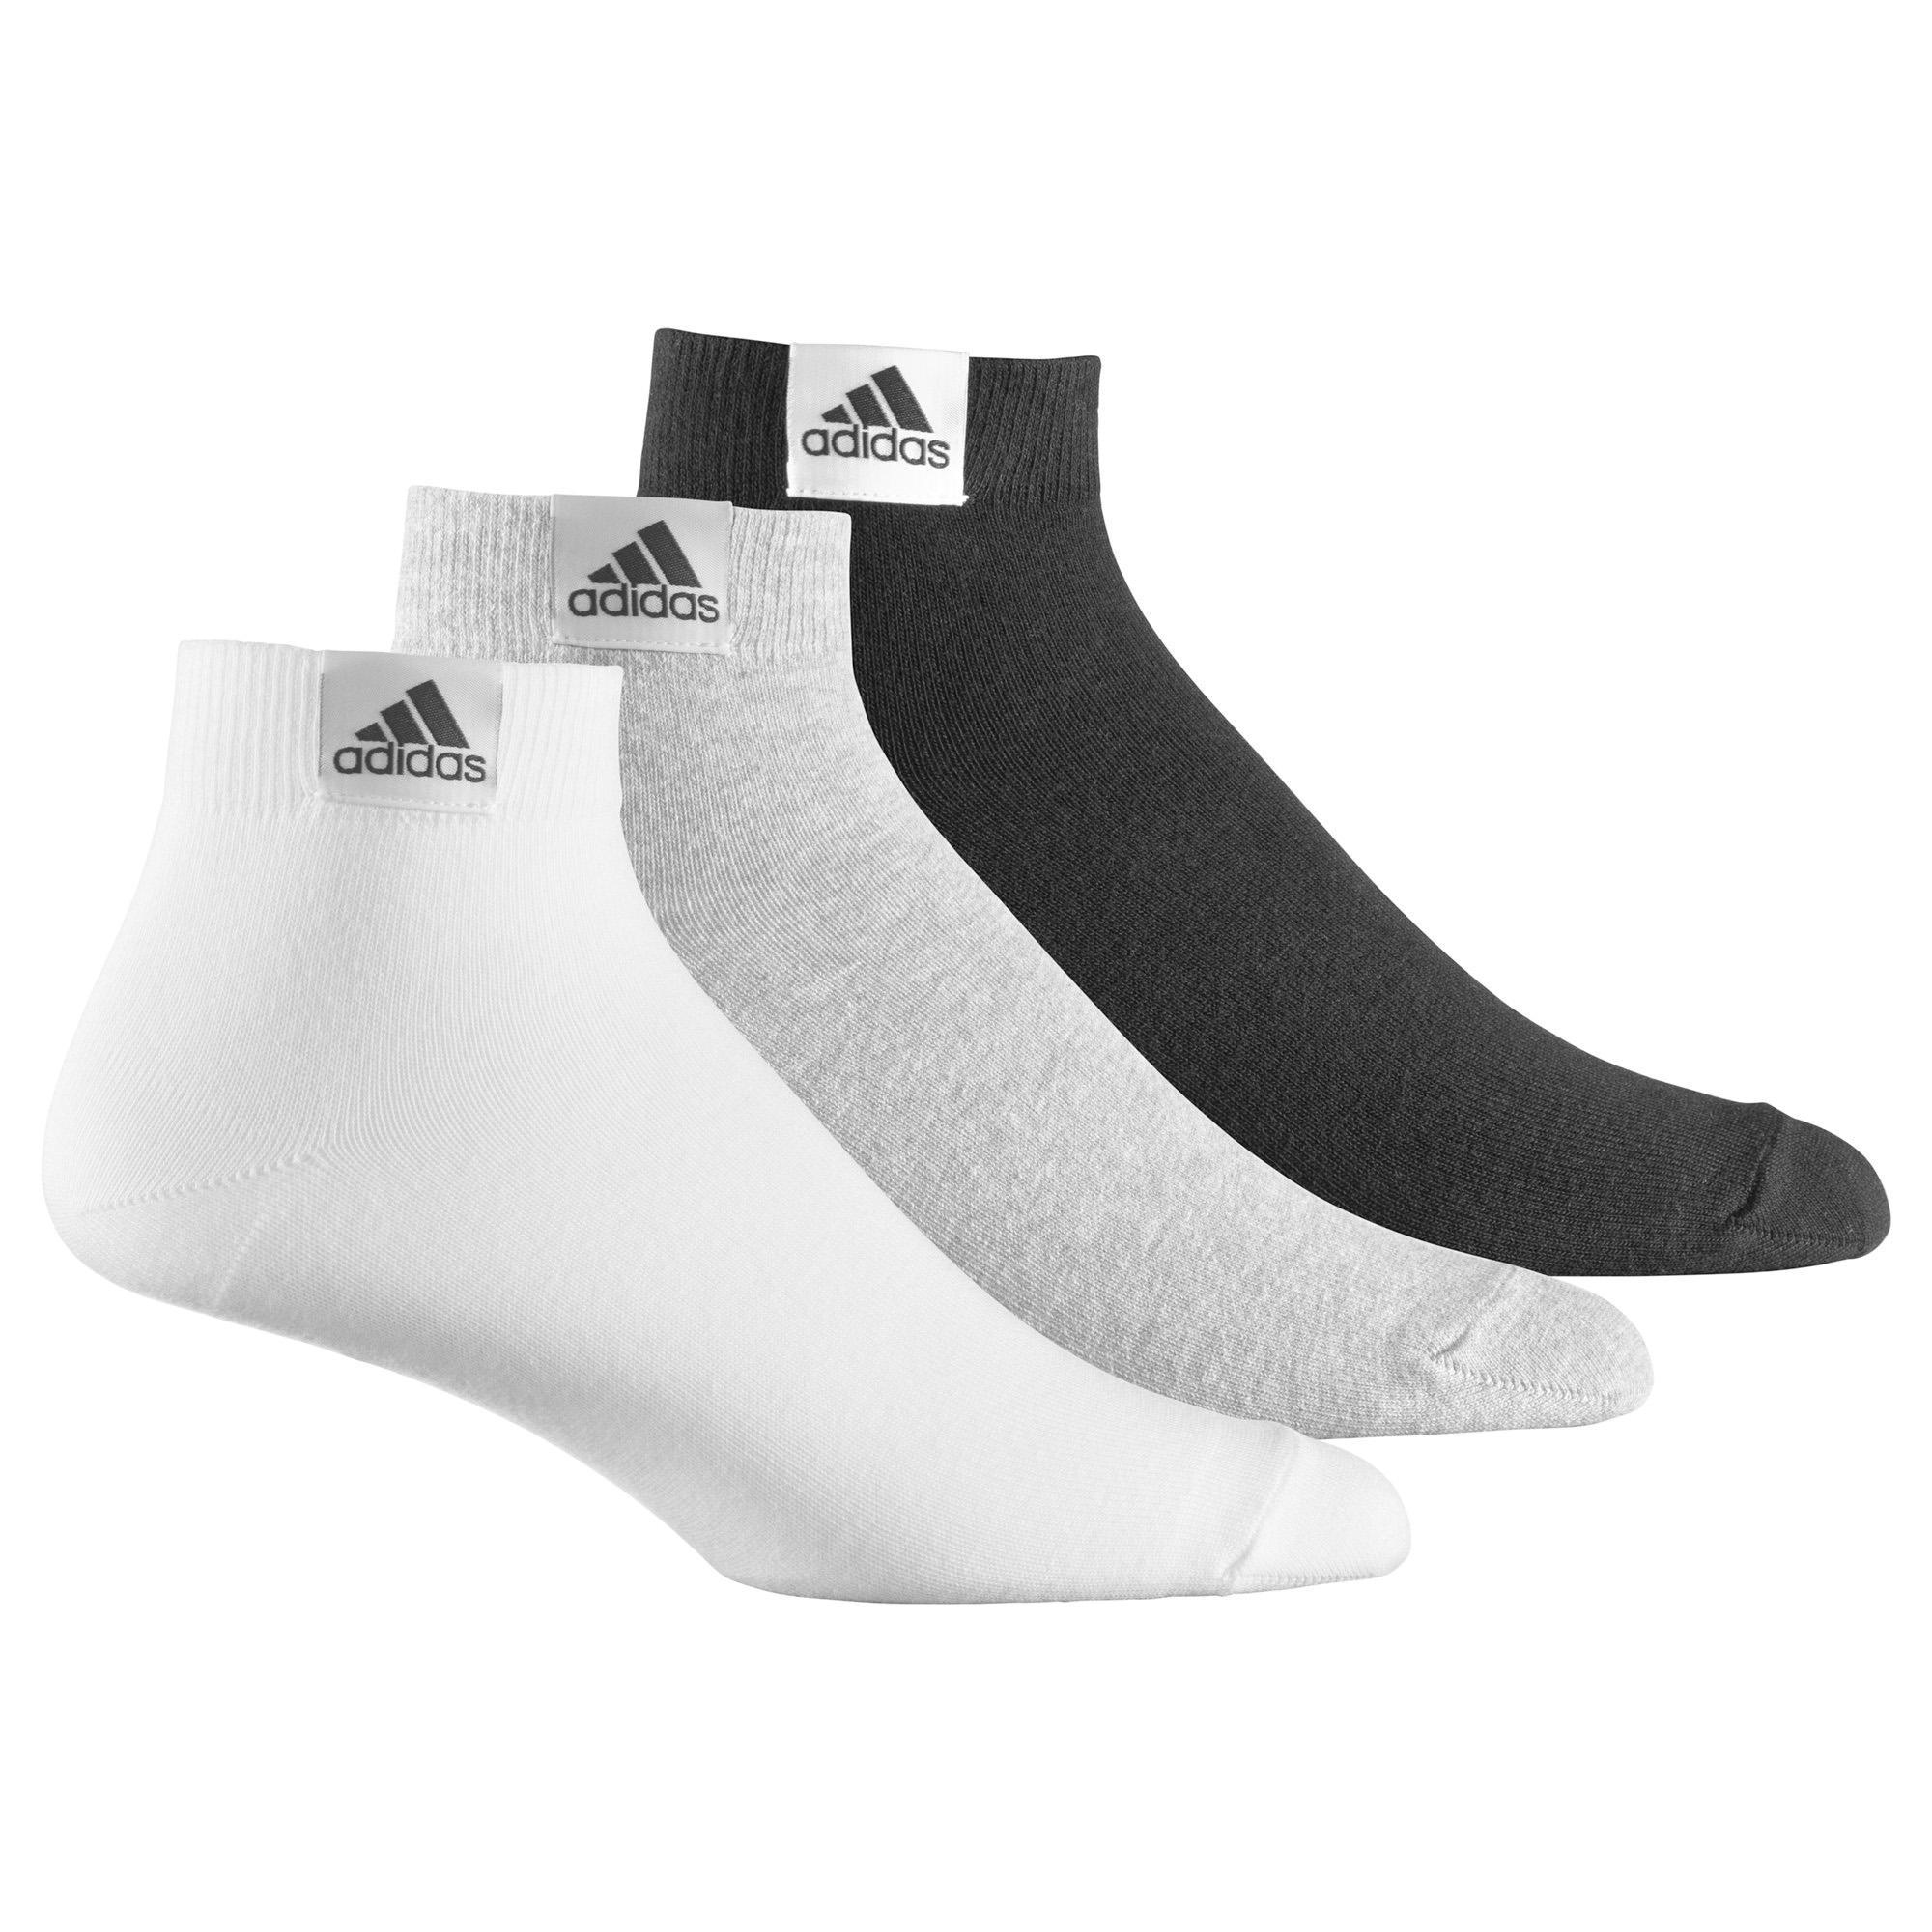 adidas thin socks